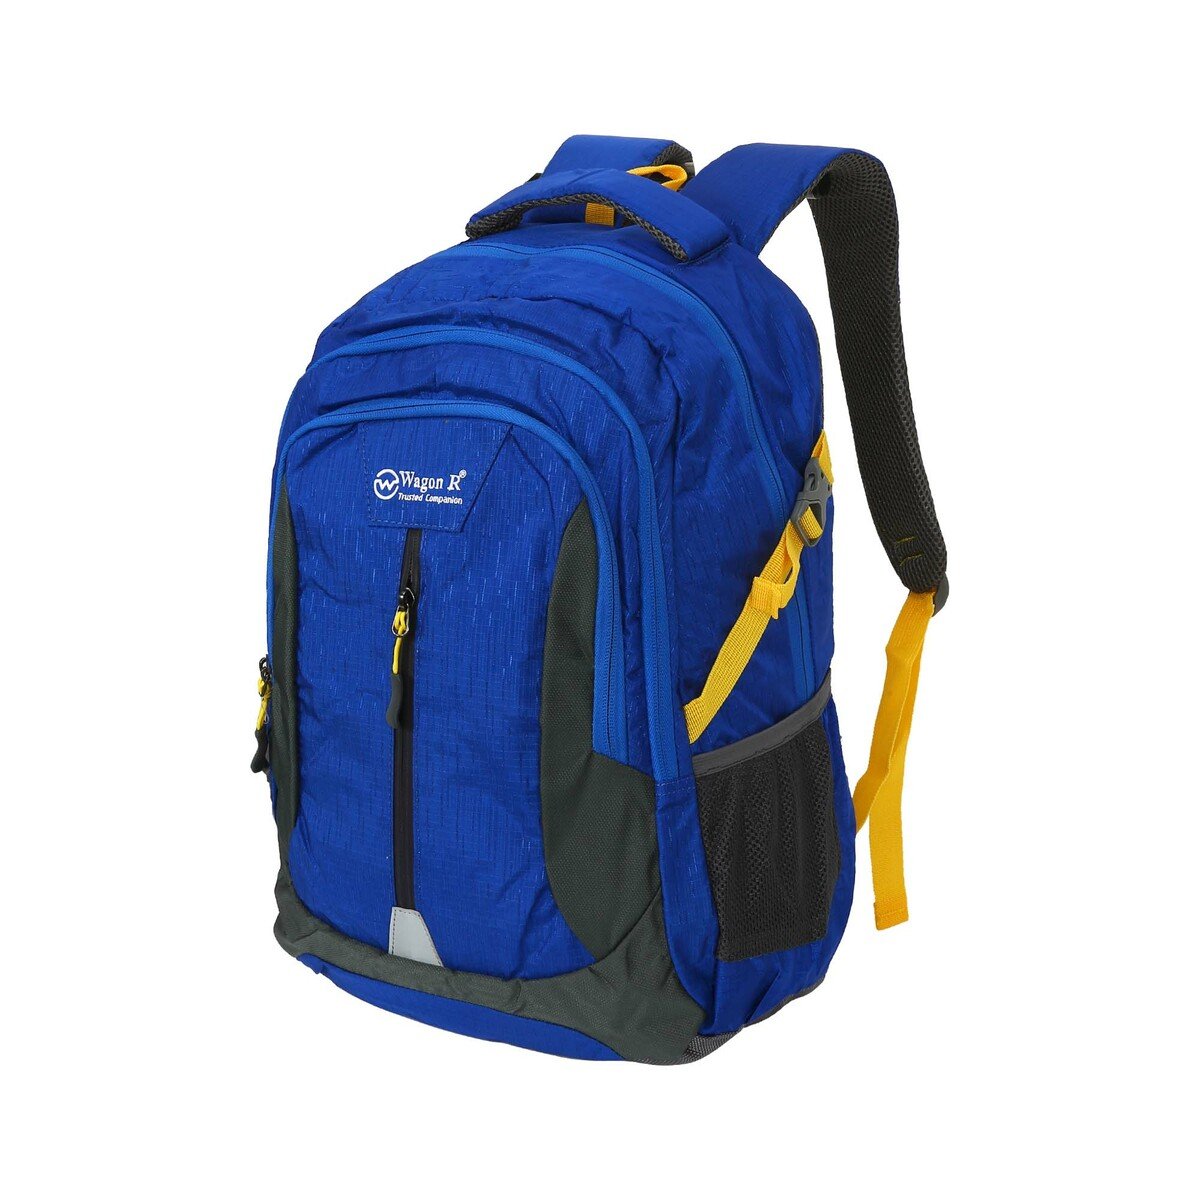 Wagon R School Backpack JN-67911 19inch